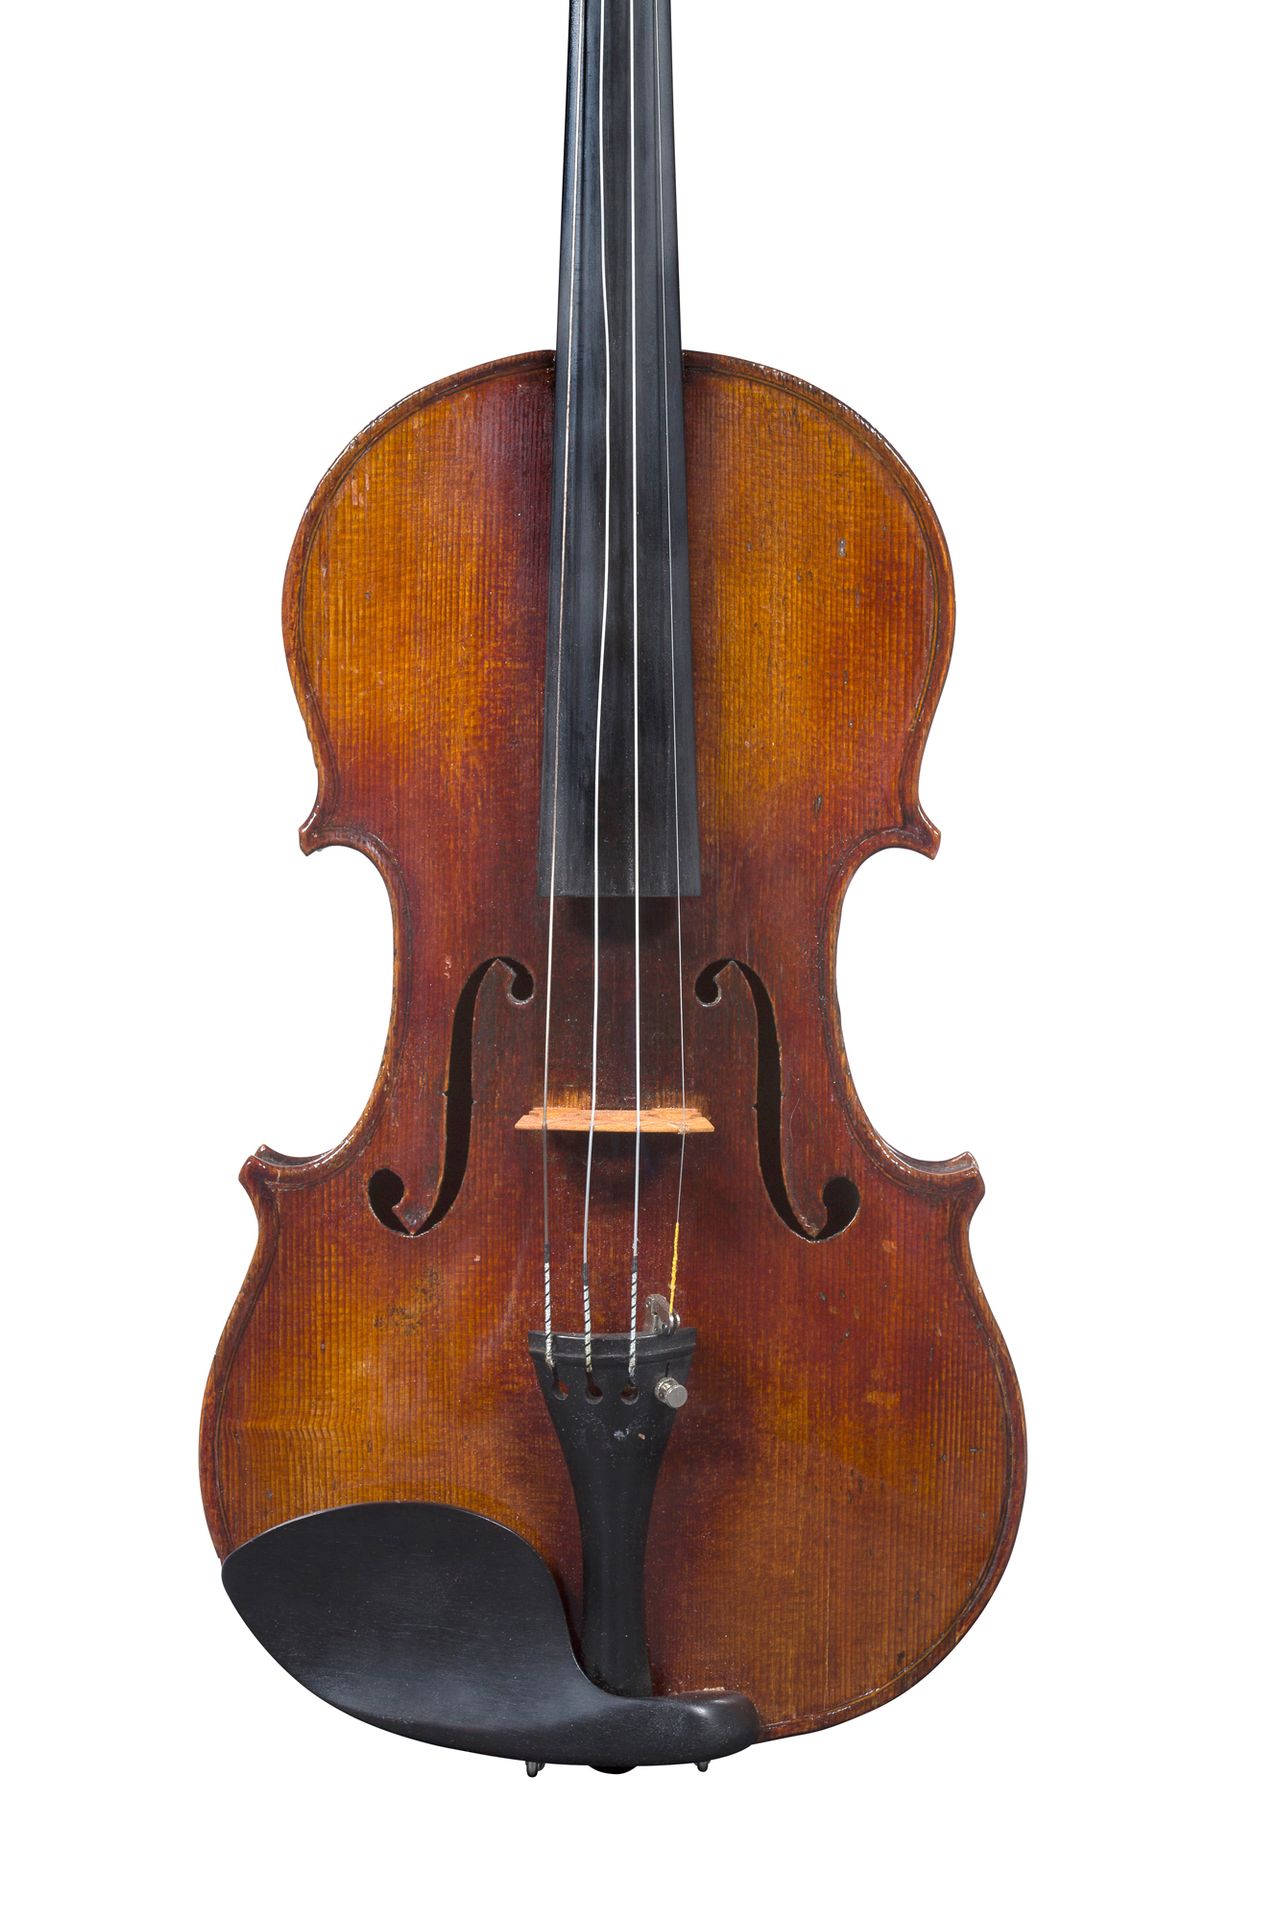 Null A French Violin, Mirecourt circa 1870-80